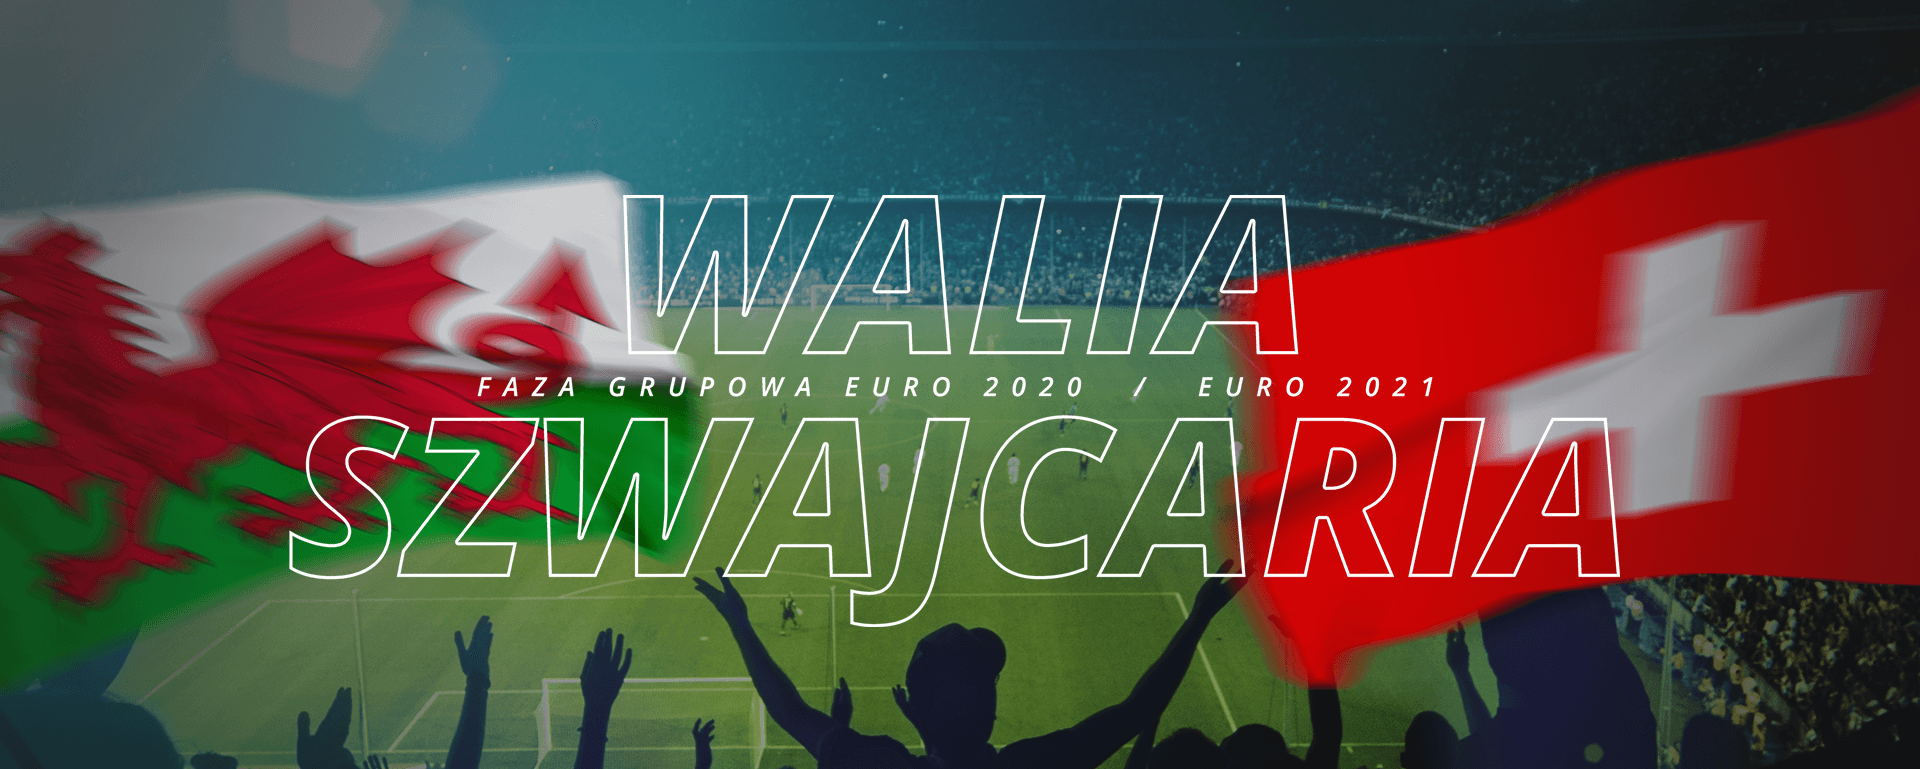 Walia – Szwajcaria | faza grupowa Euro 2020 / Euro 2021